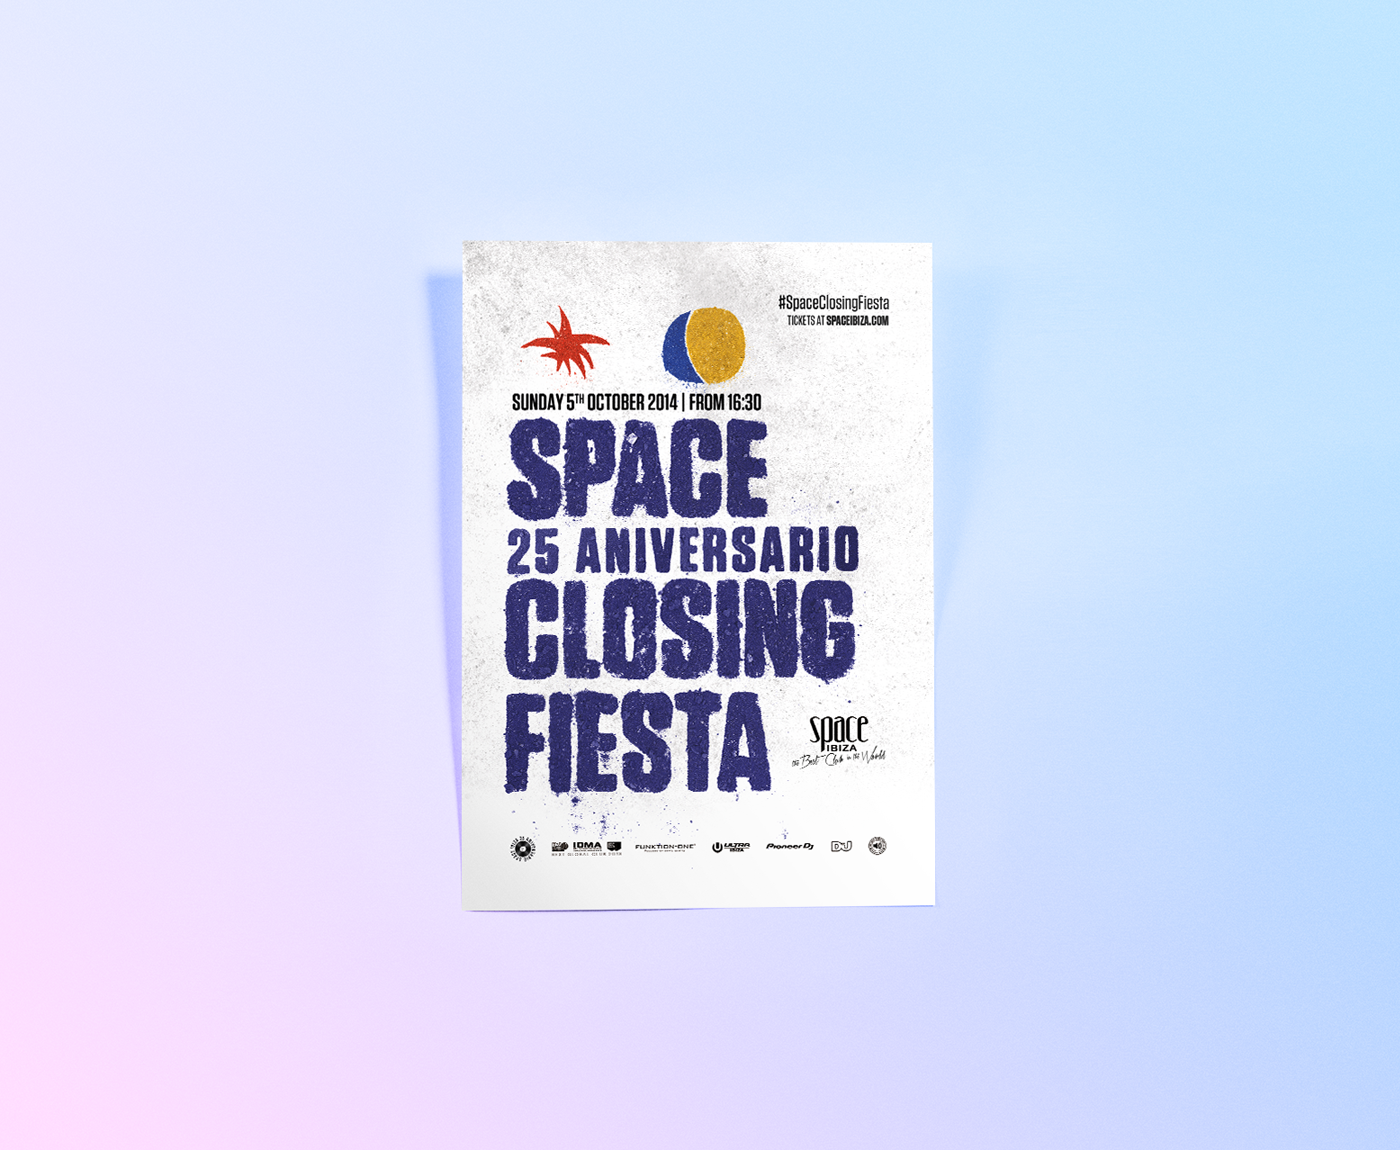 space ibiza Space  ibiza 25 aniversario 25th Anniversary closing fiesta party clubbing poster artwork manual typography tipografía manual Arena sand